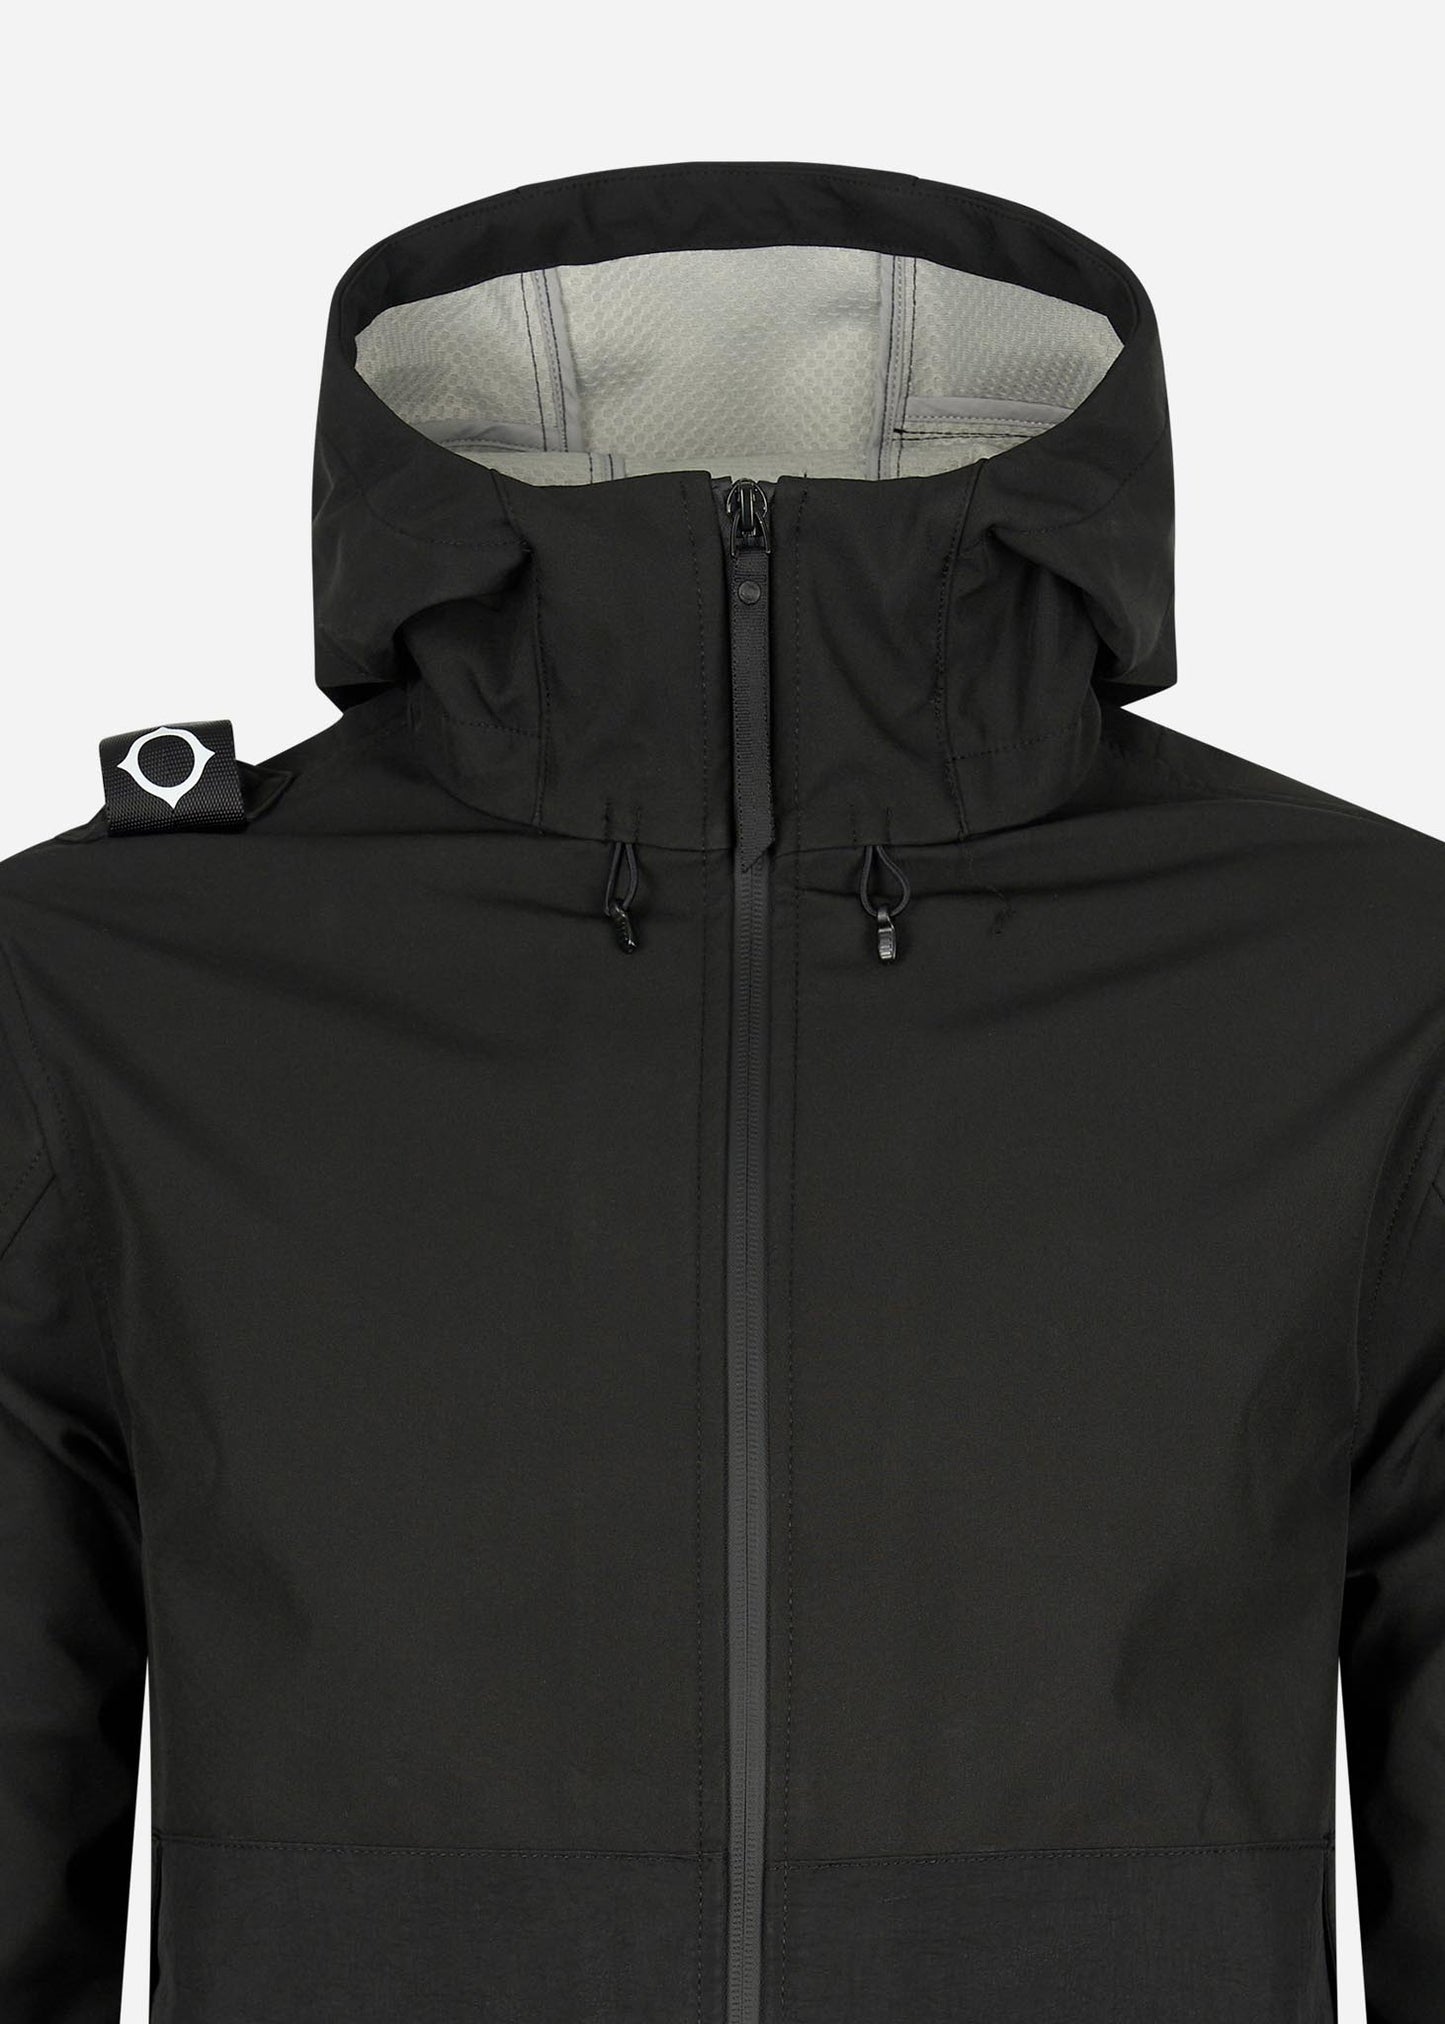 Softshell hooded jacket - jet black